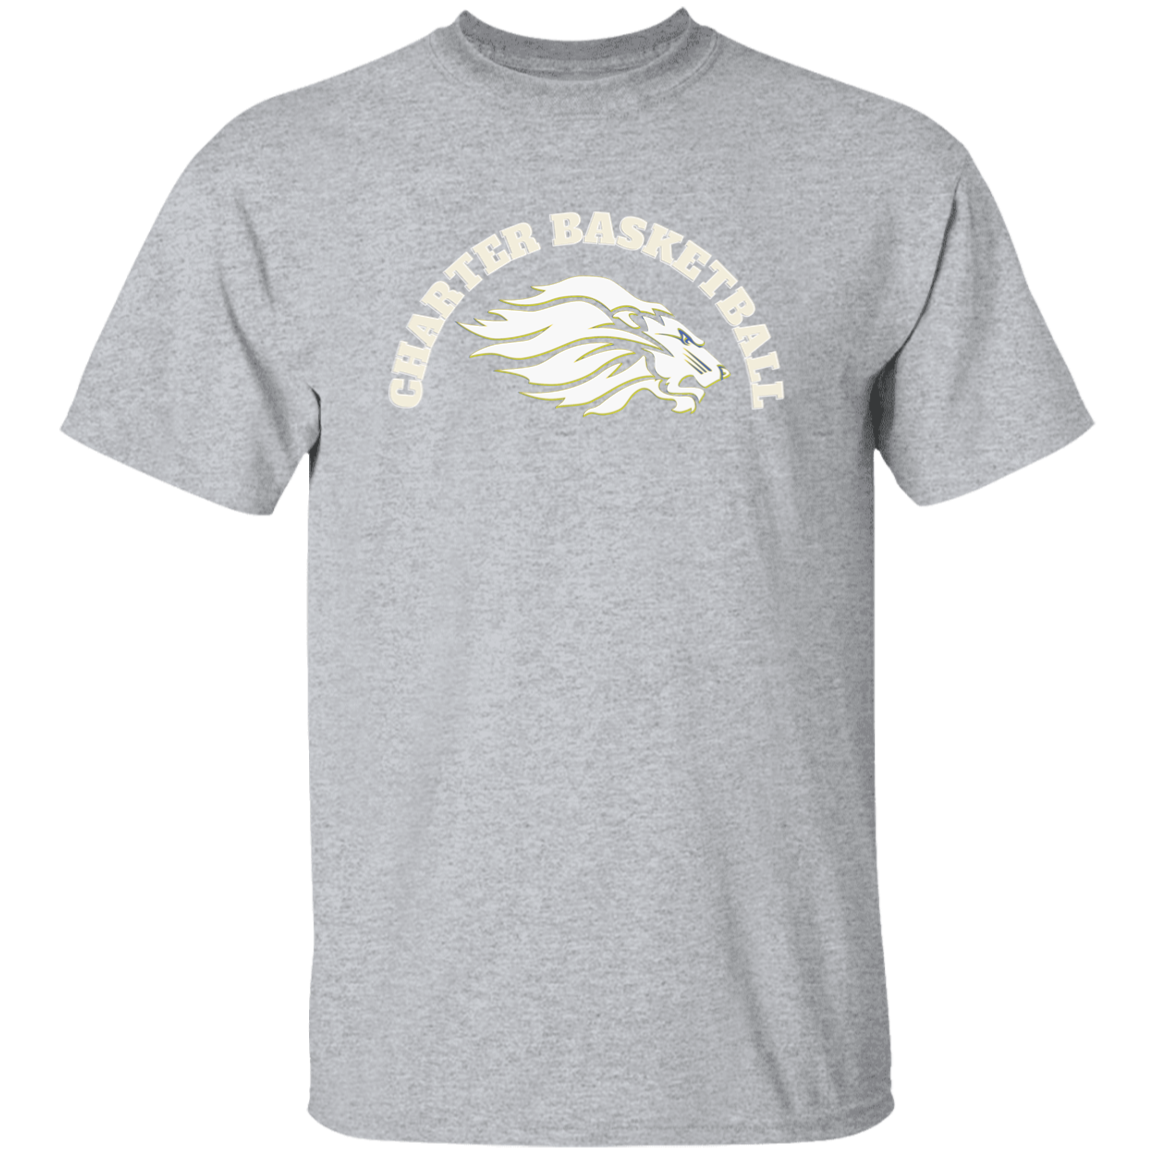 Charter Basketball Youth 5.3 oz 100% Cotton T-Shirt